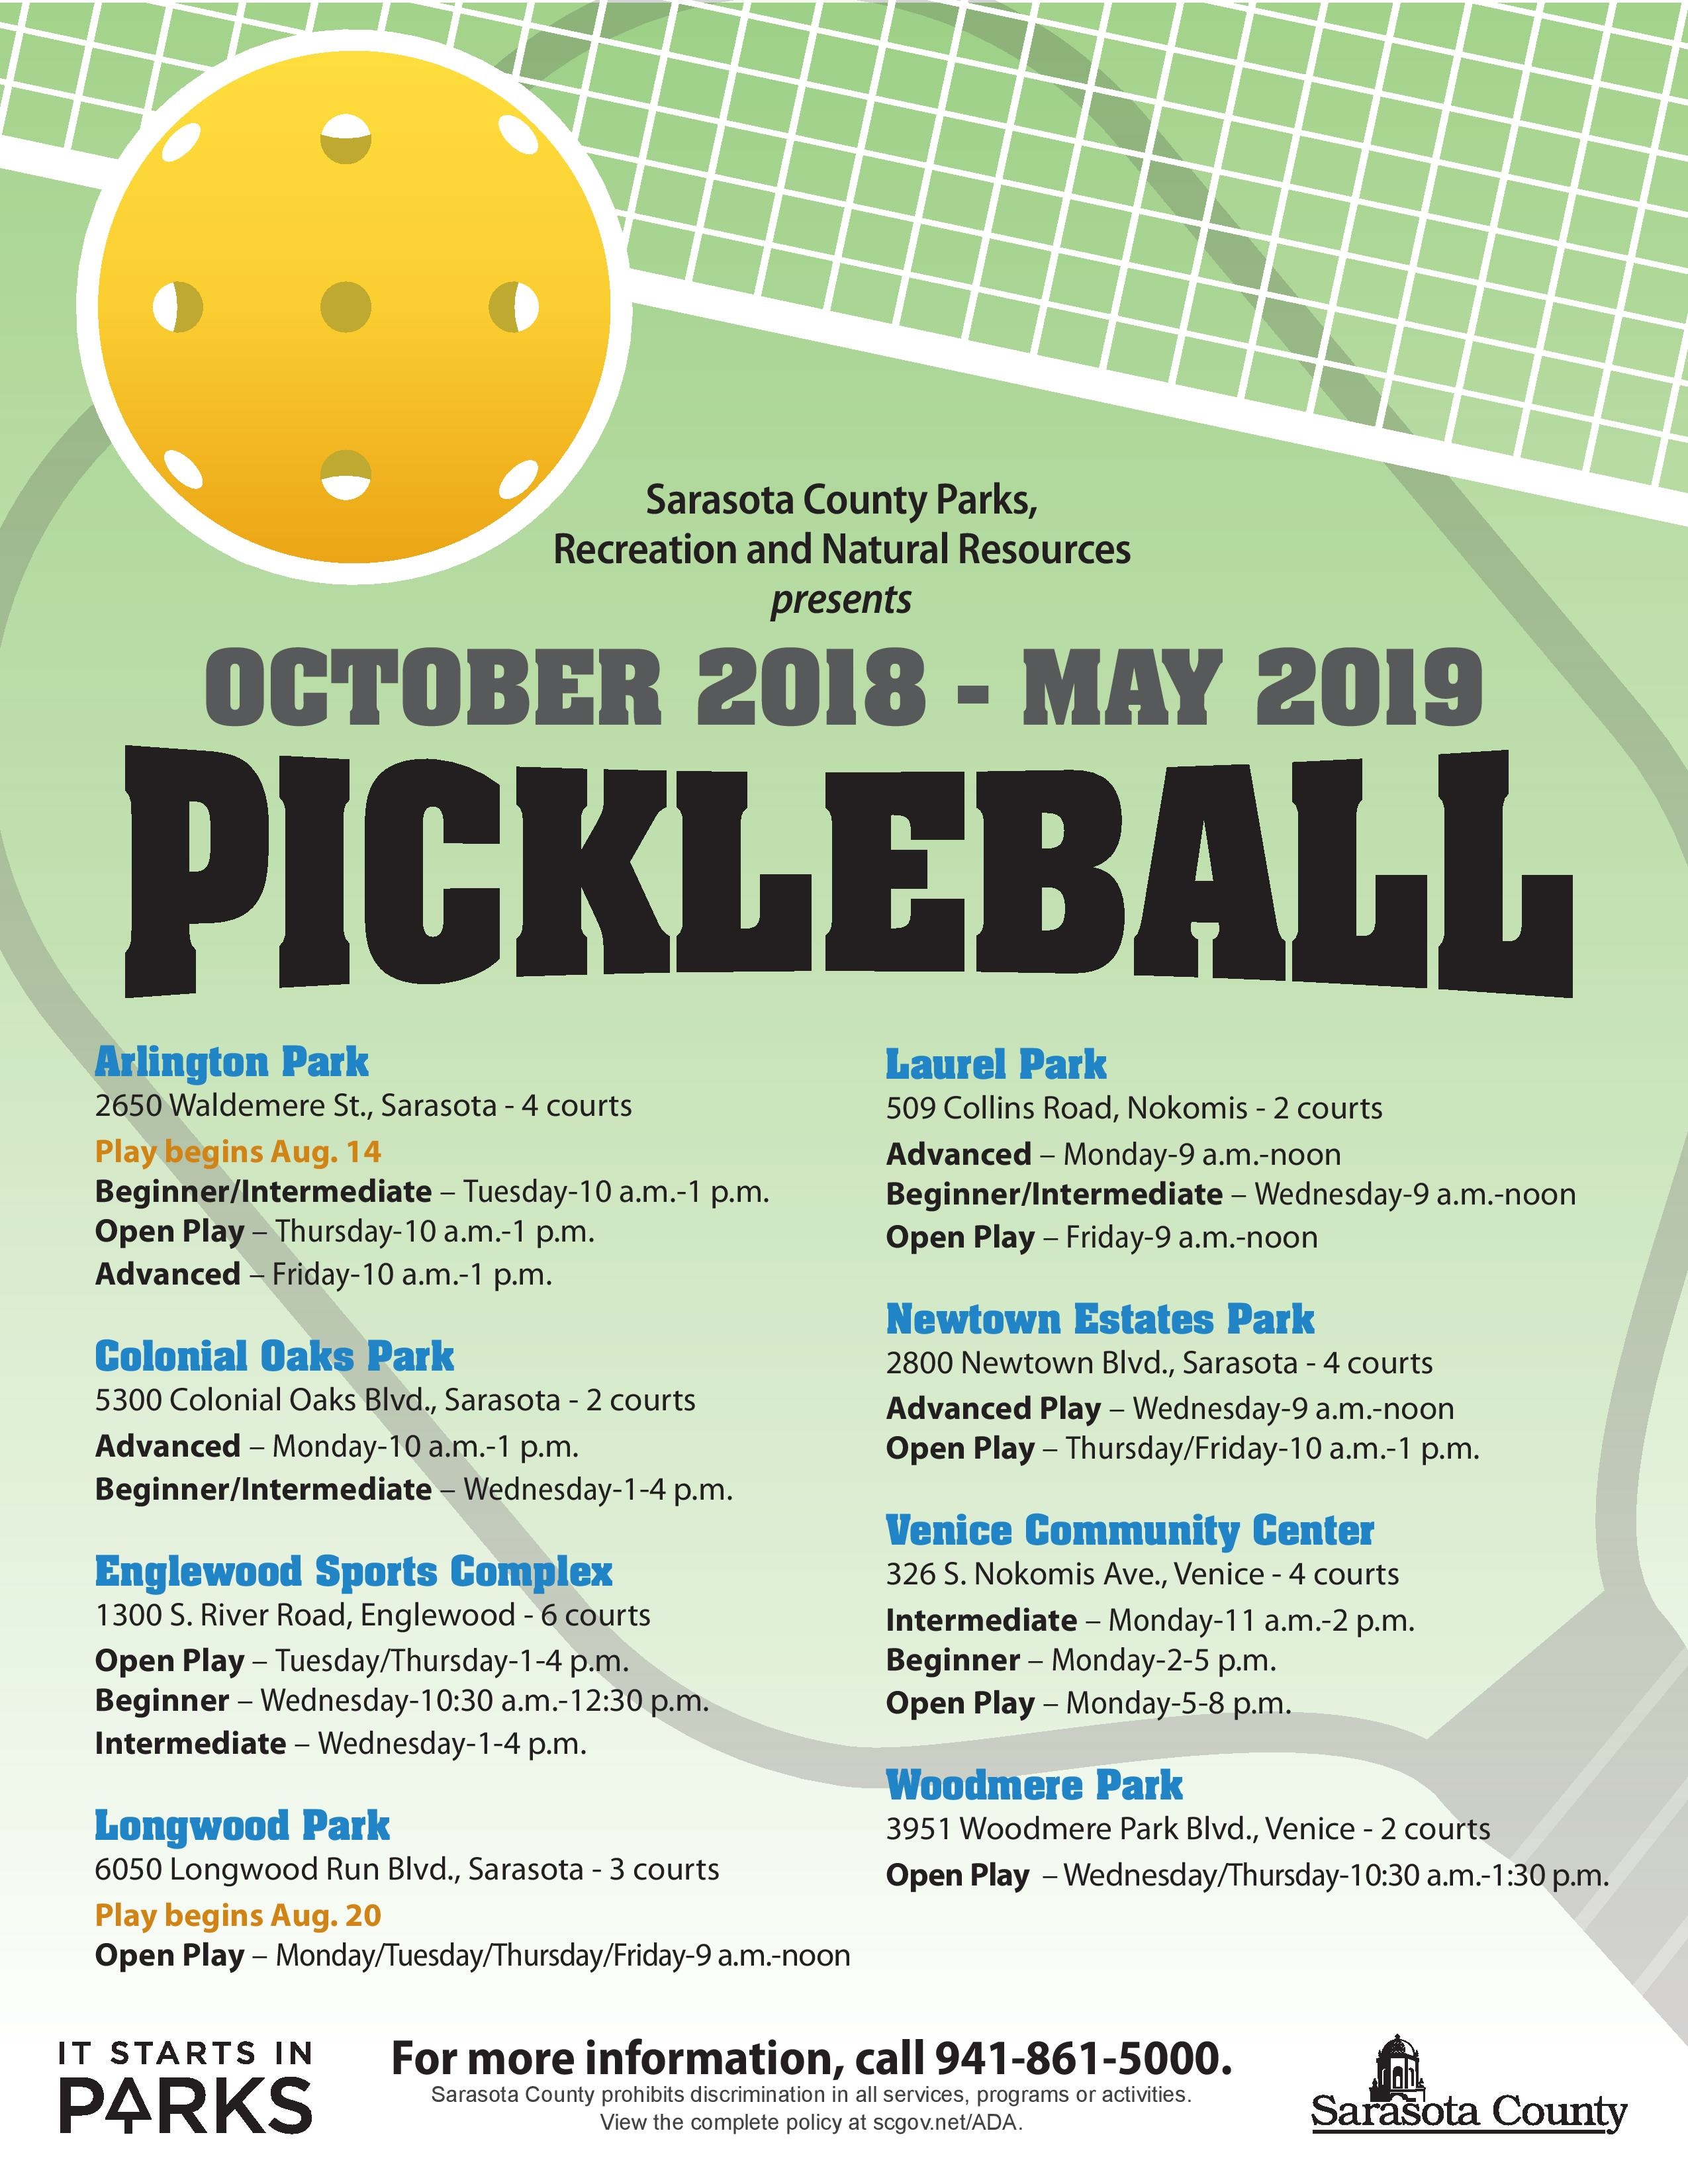 Sarasota Pickleball – For pickleball players of all skill level in Sarasota